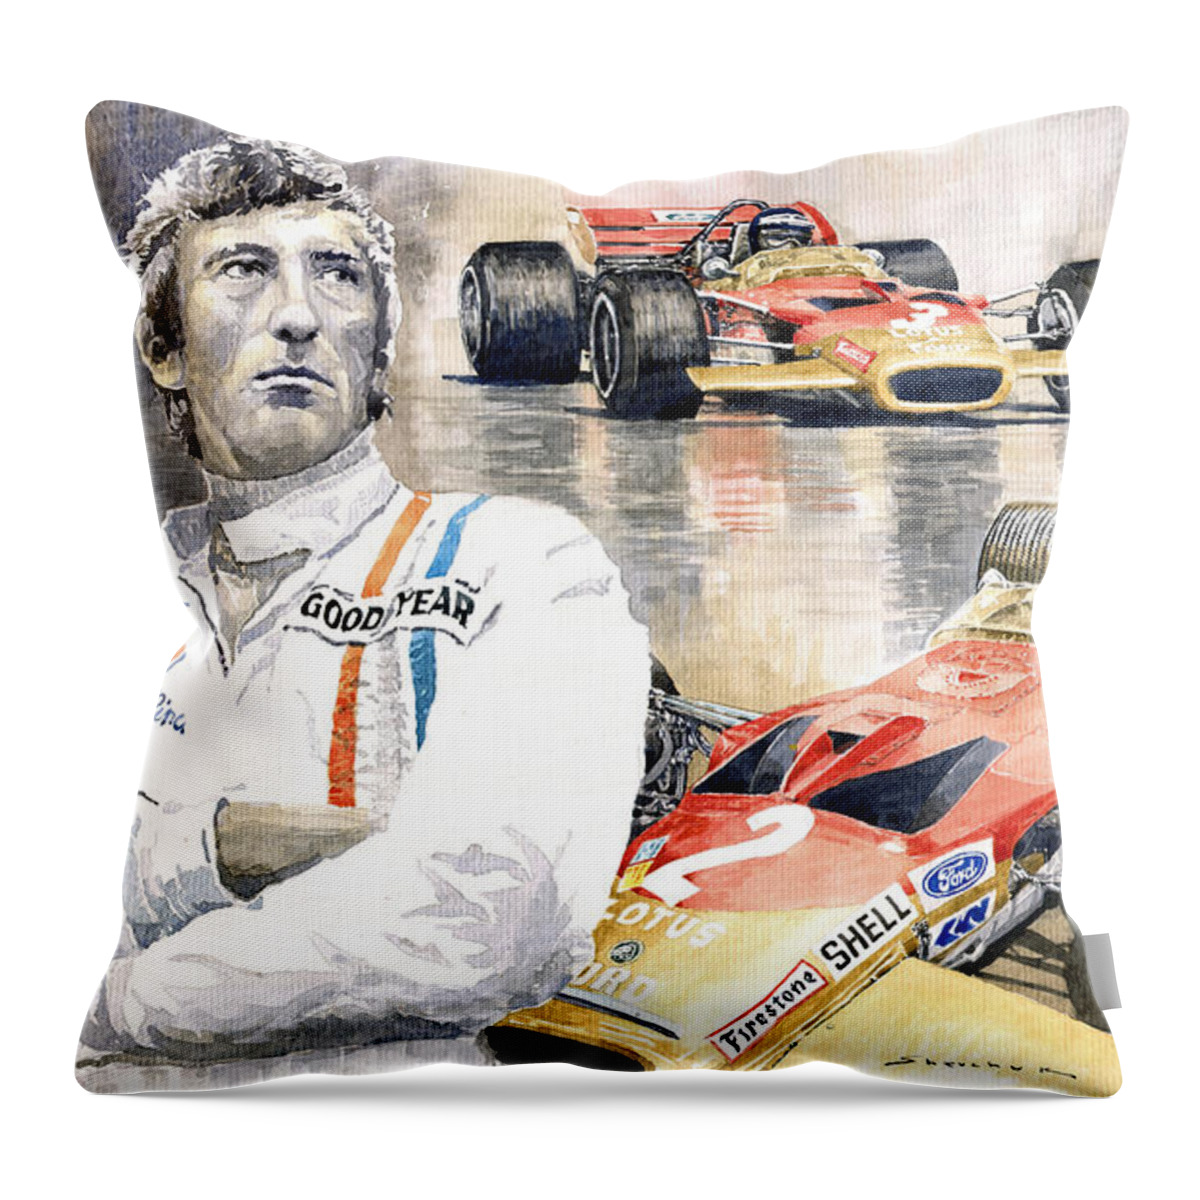 Watercolor Throw Pillow featuring the painting Jochen Rindt Golden Leaf Team Lotus Lotus 49b Lotus 49c by Yuriy Shevchuk